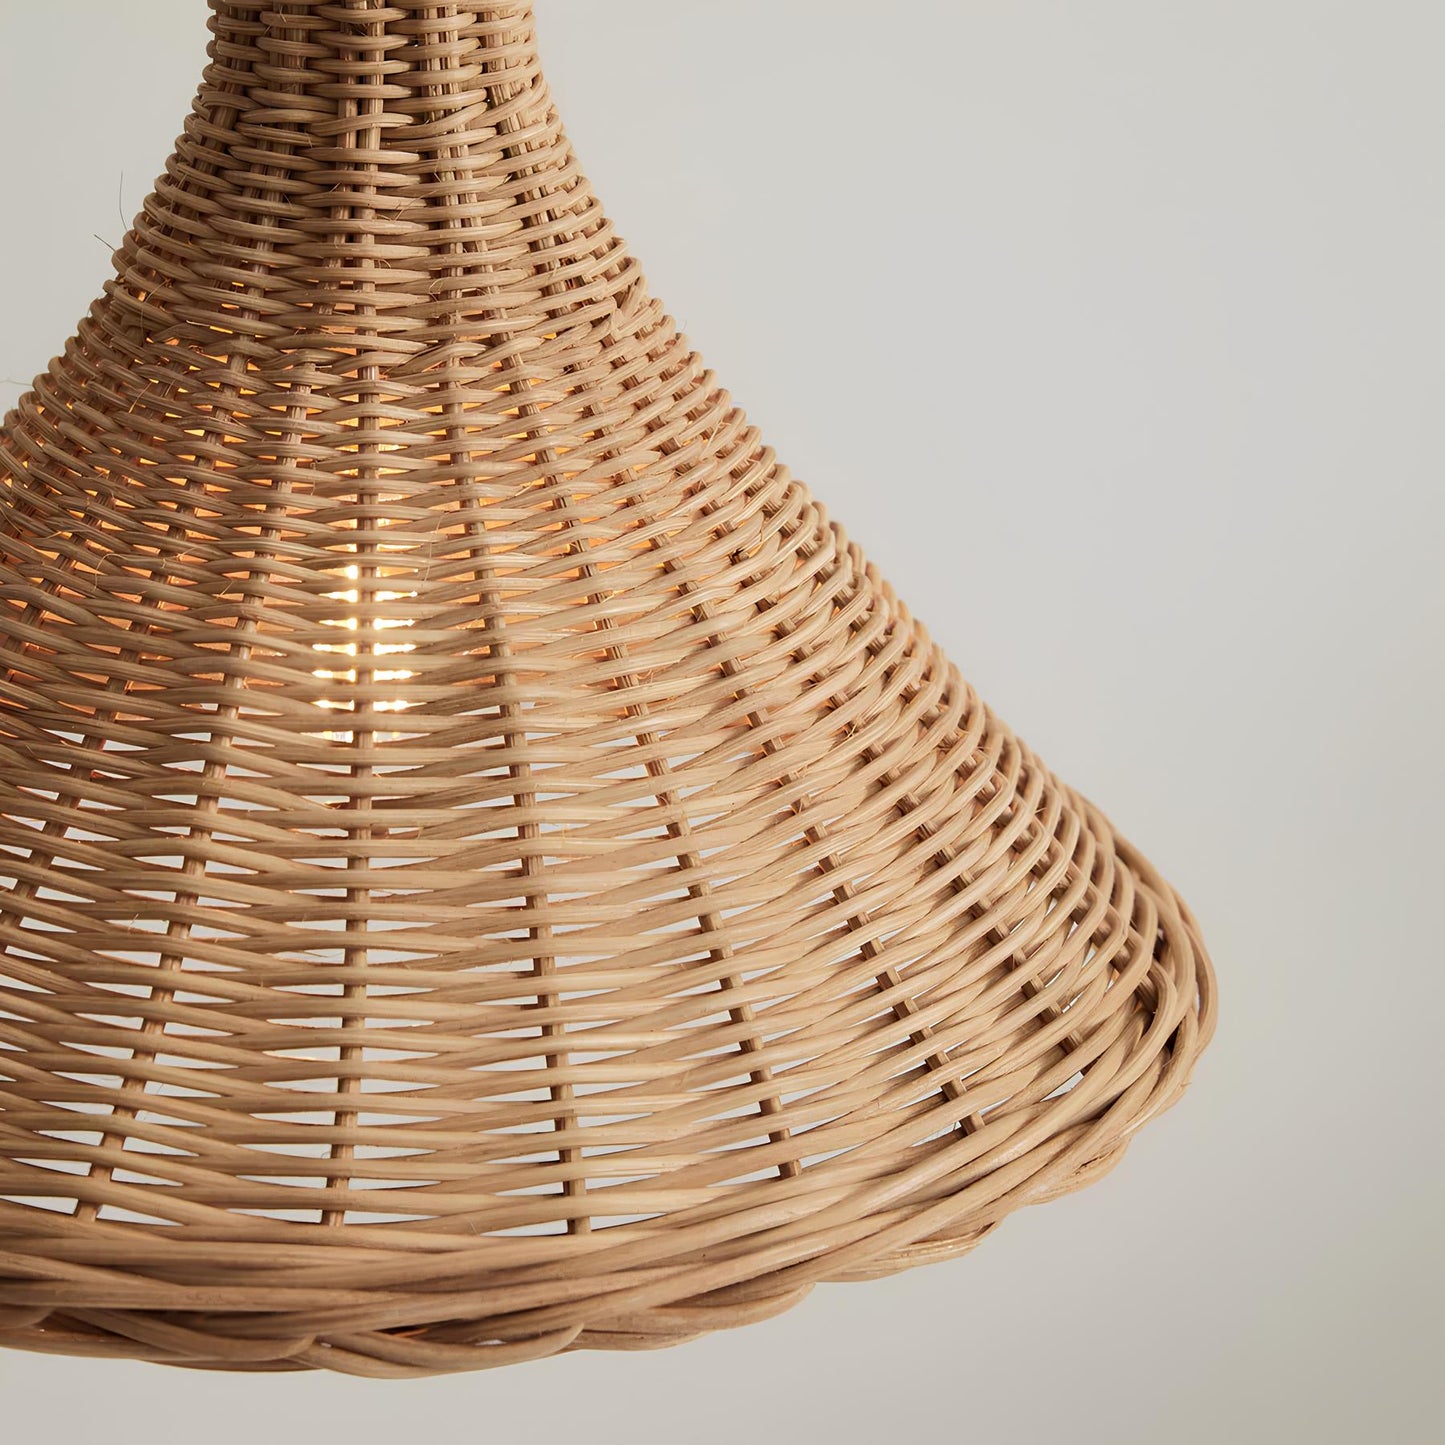 Bamboo Hanging lamp for Living Room | Rattan Pendant light | Cane ceiling light - Hanita - Akway